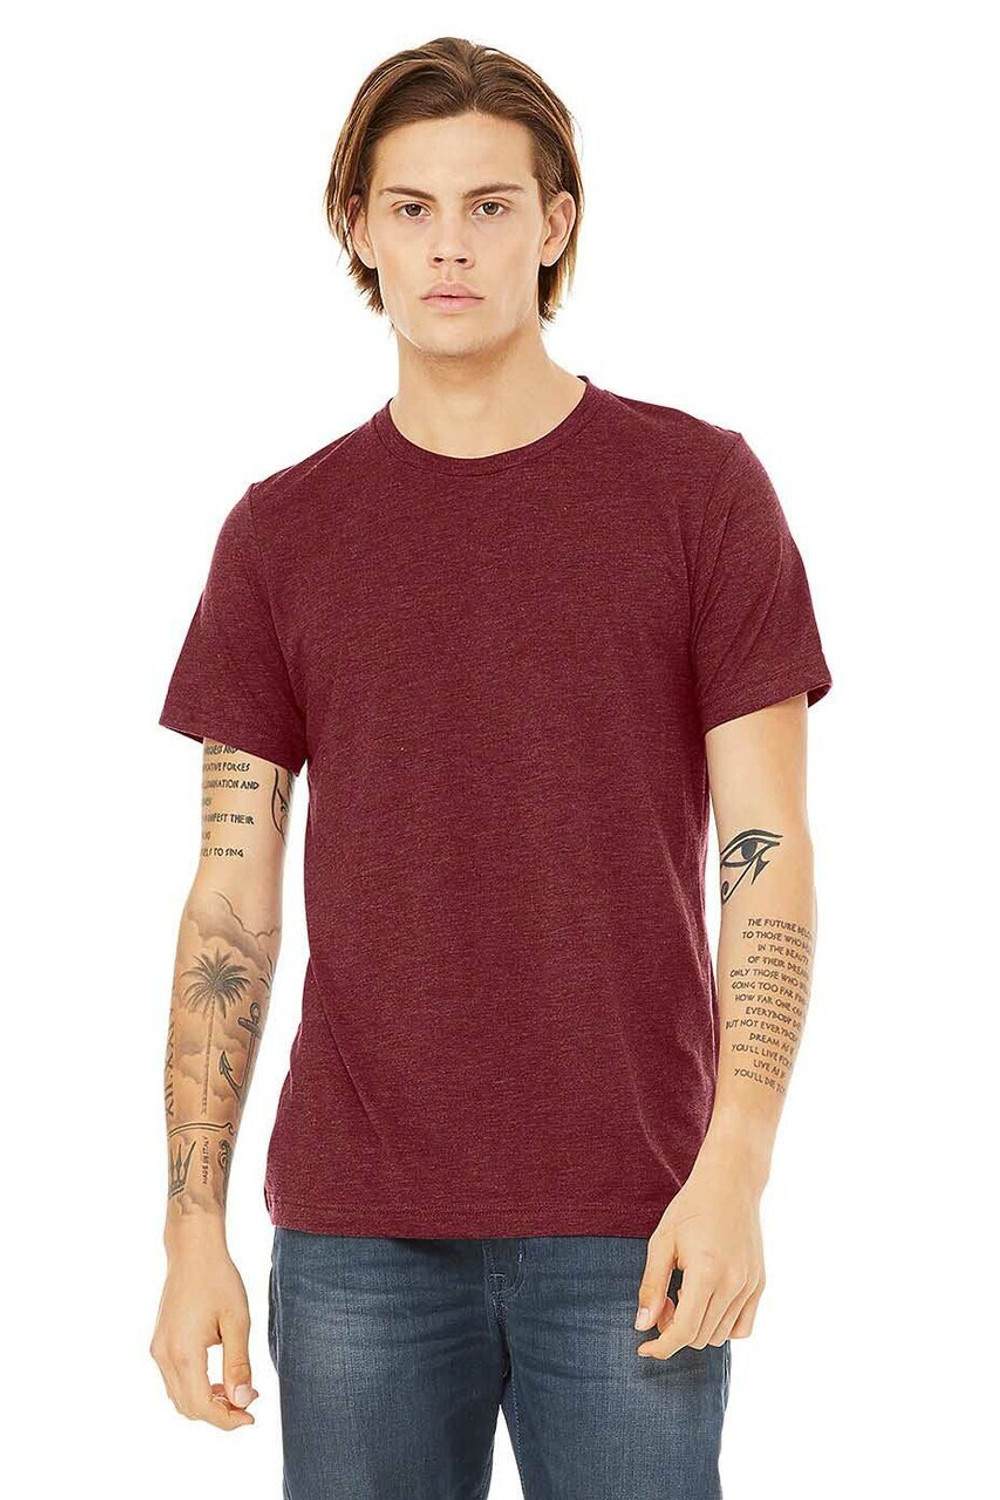 Buy Short Sleeve T-Shirts for Short Men